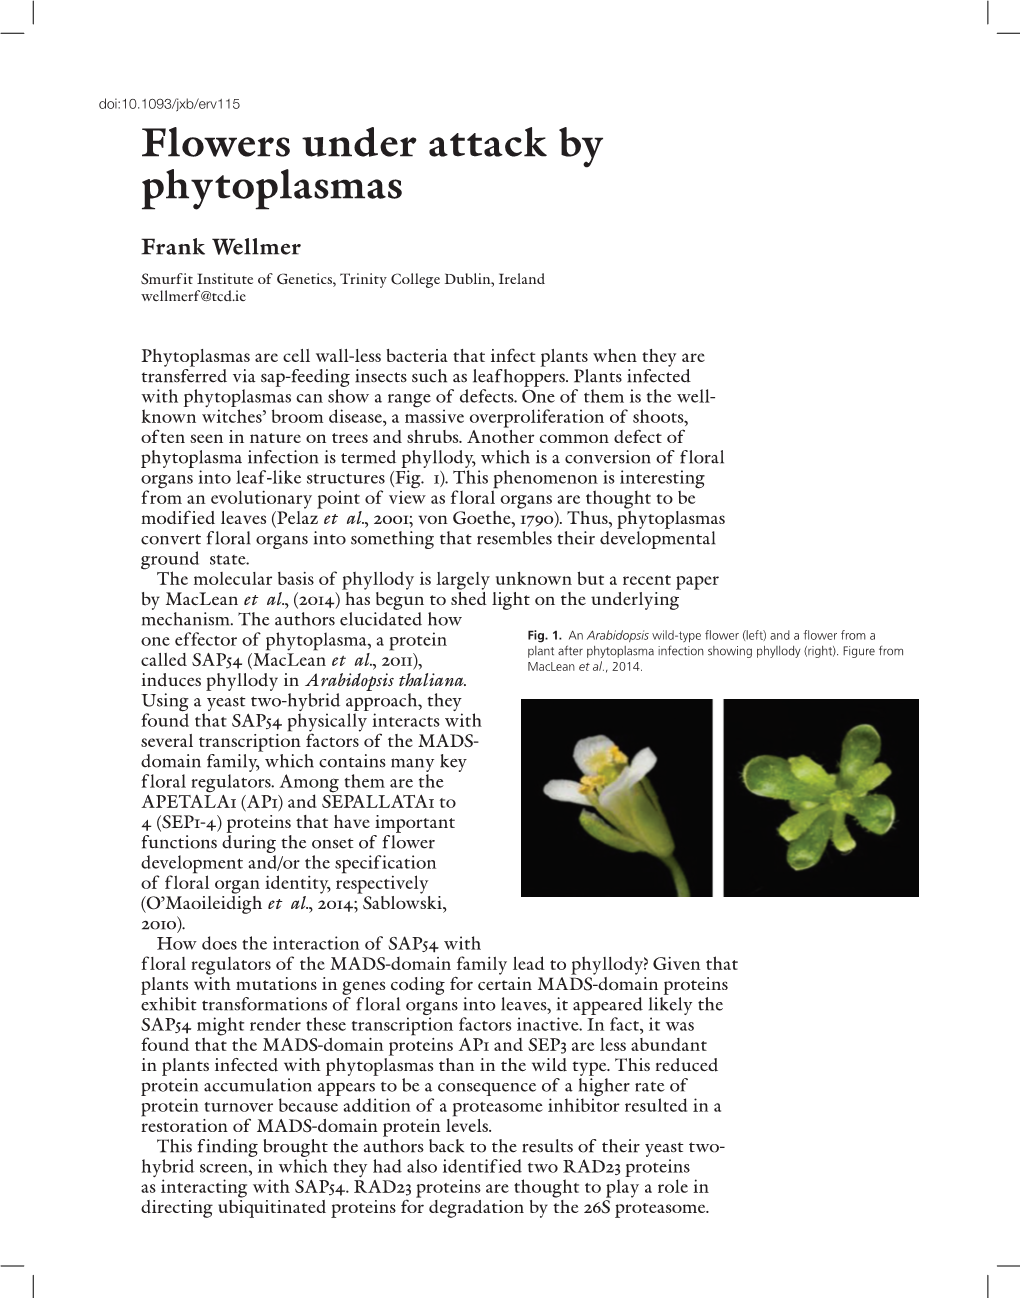 Flowers Under Attack by Phytoplasmas